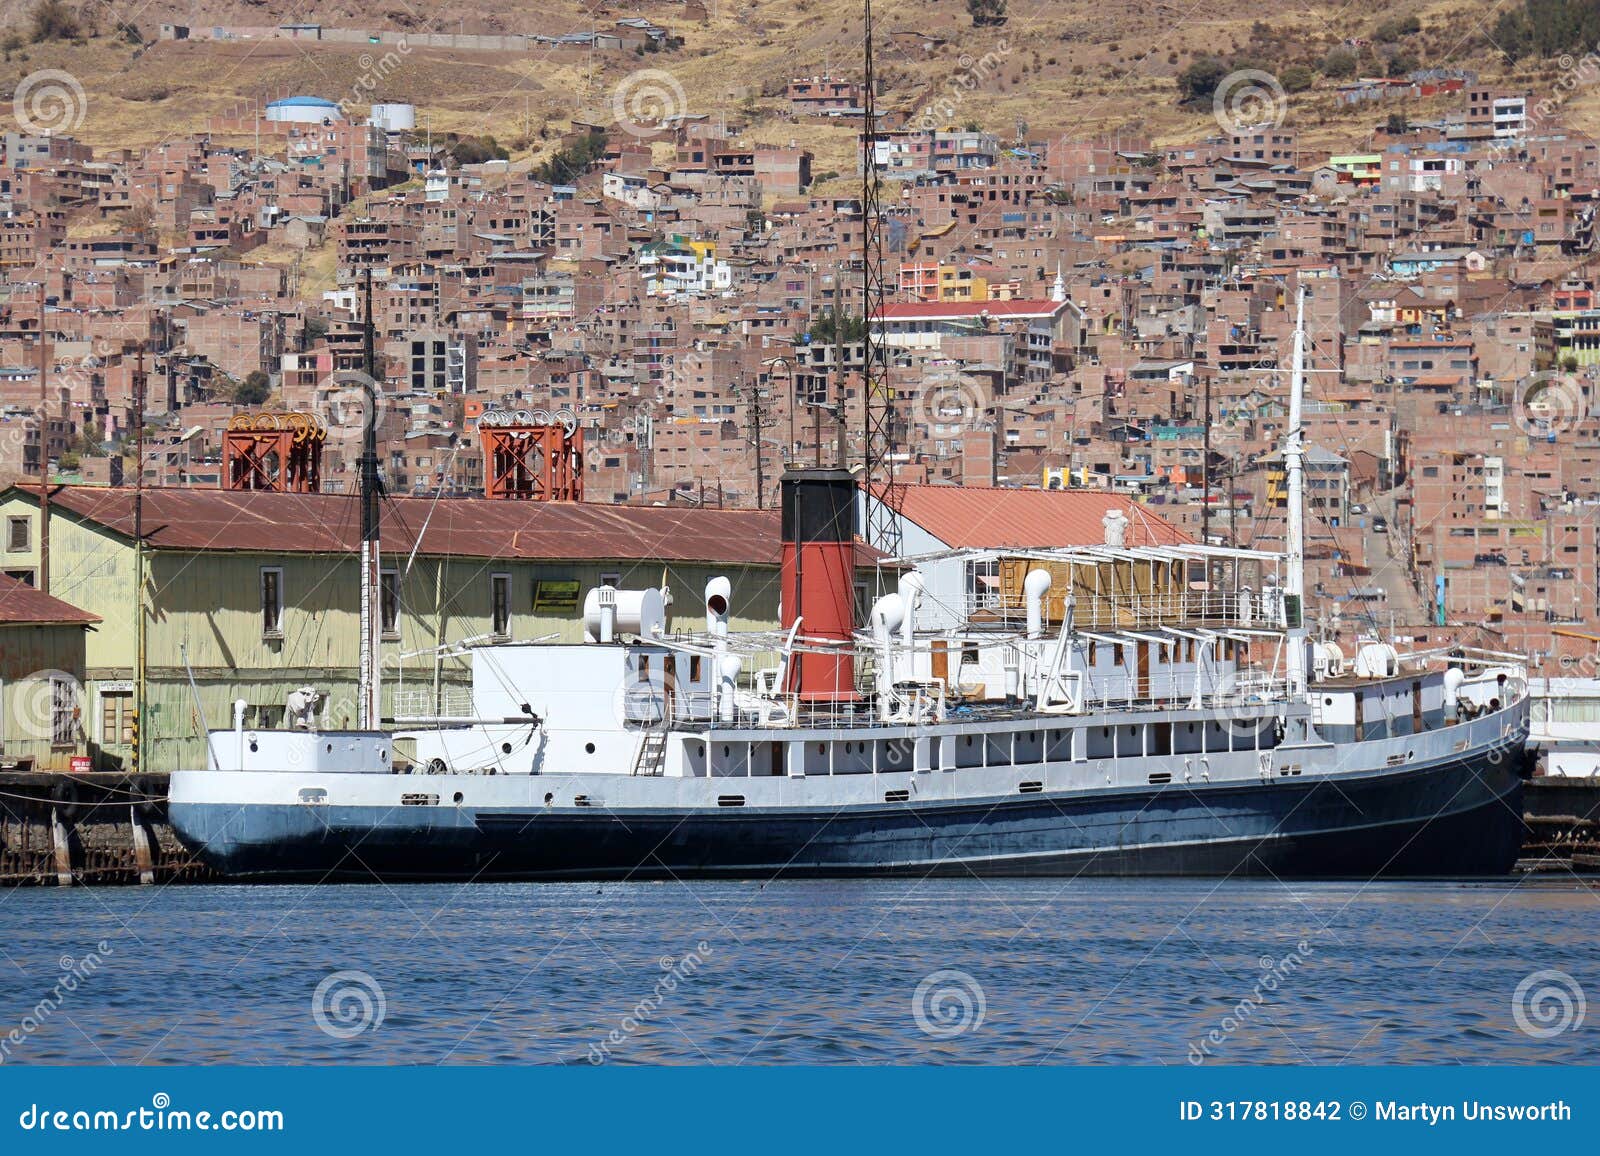 historic steamship docked on lake titicaca in puno, peru